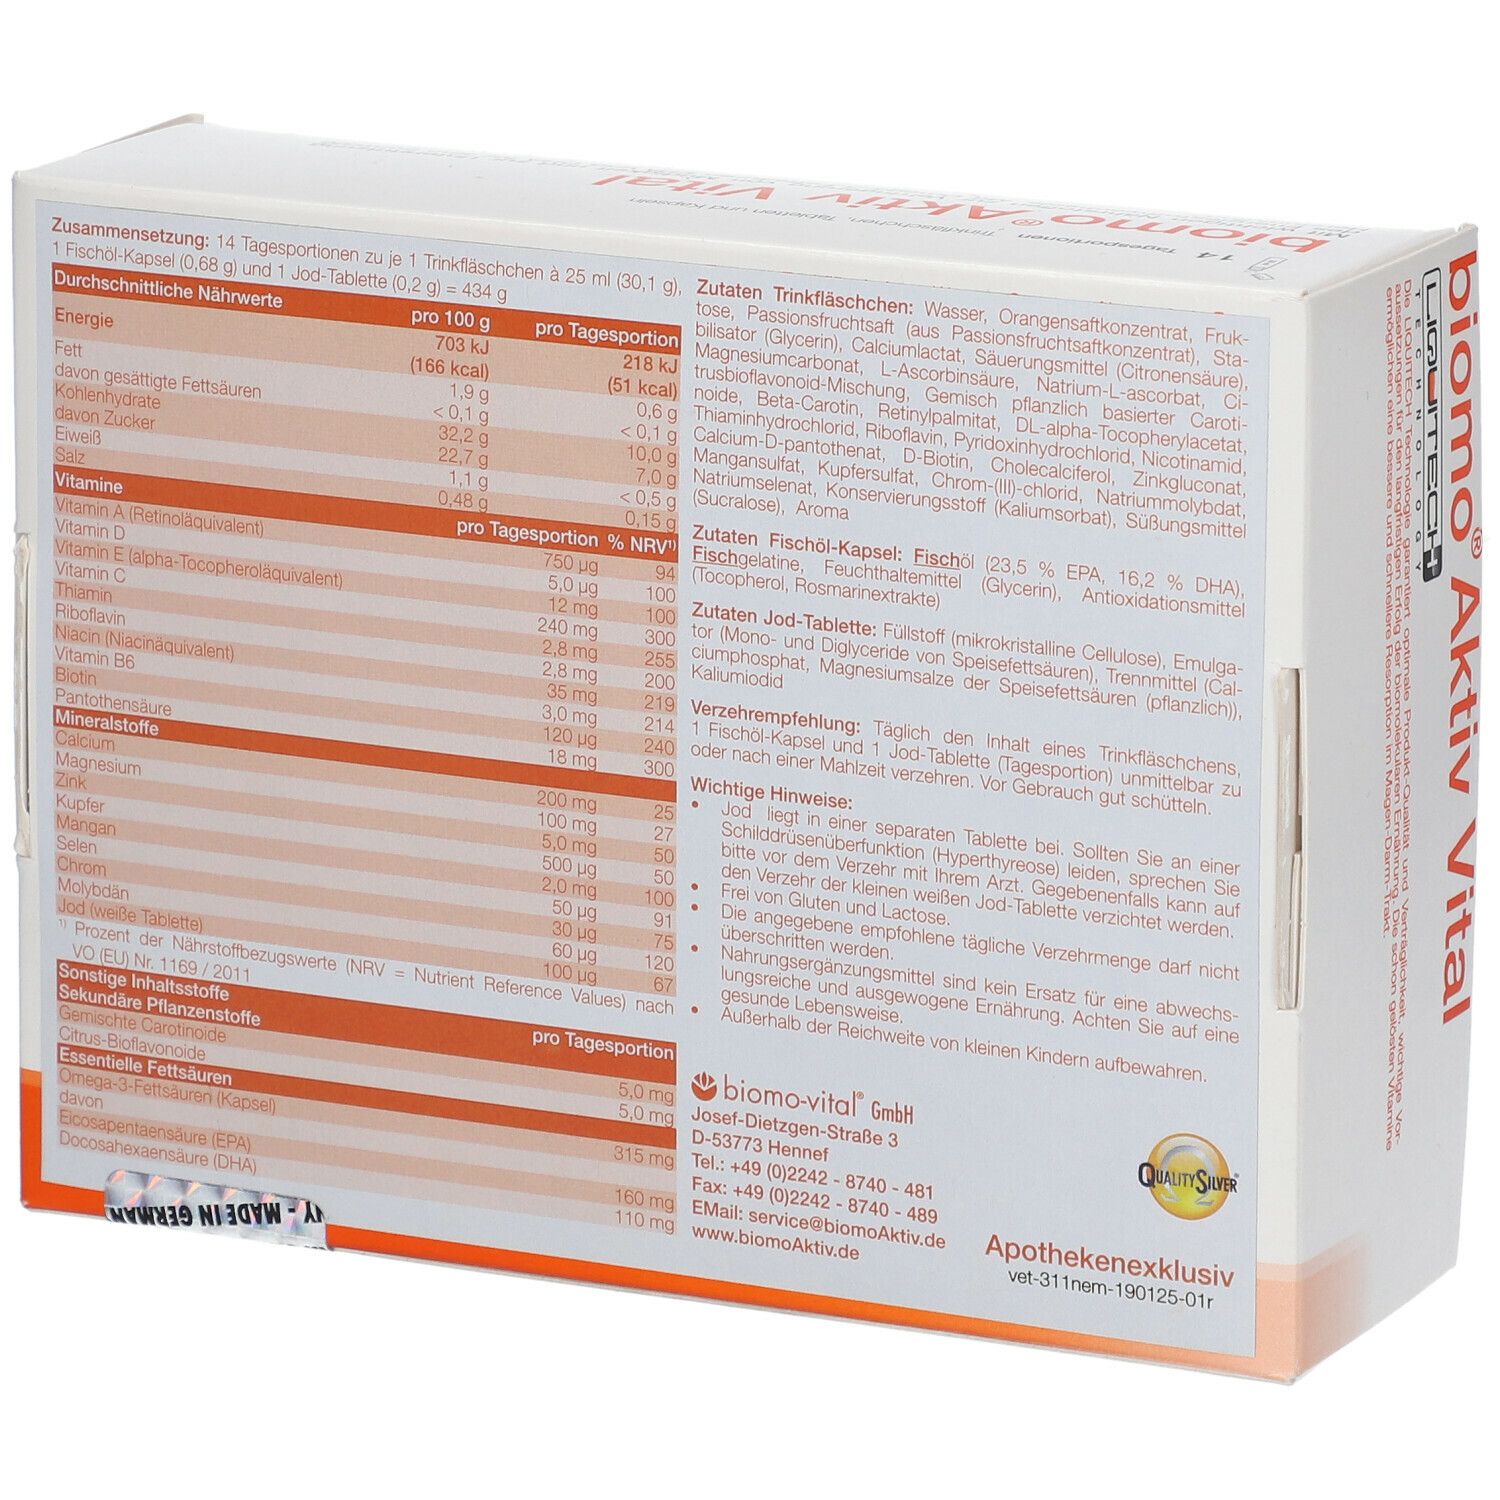 biomo® Aktiv Vital Orange